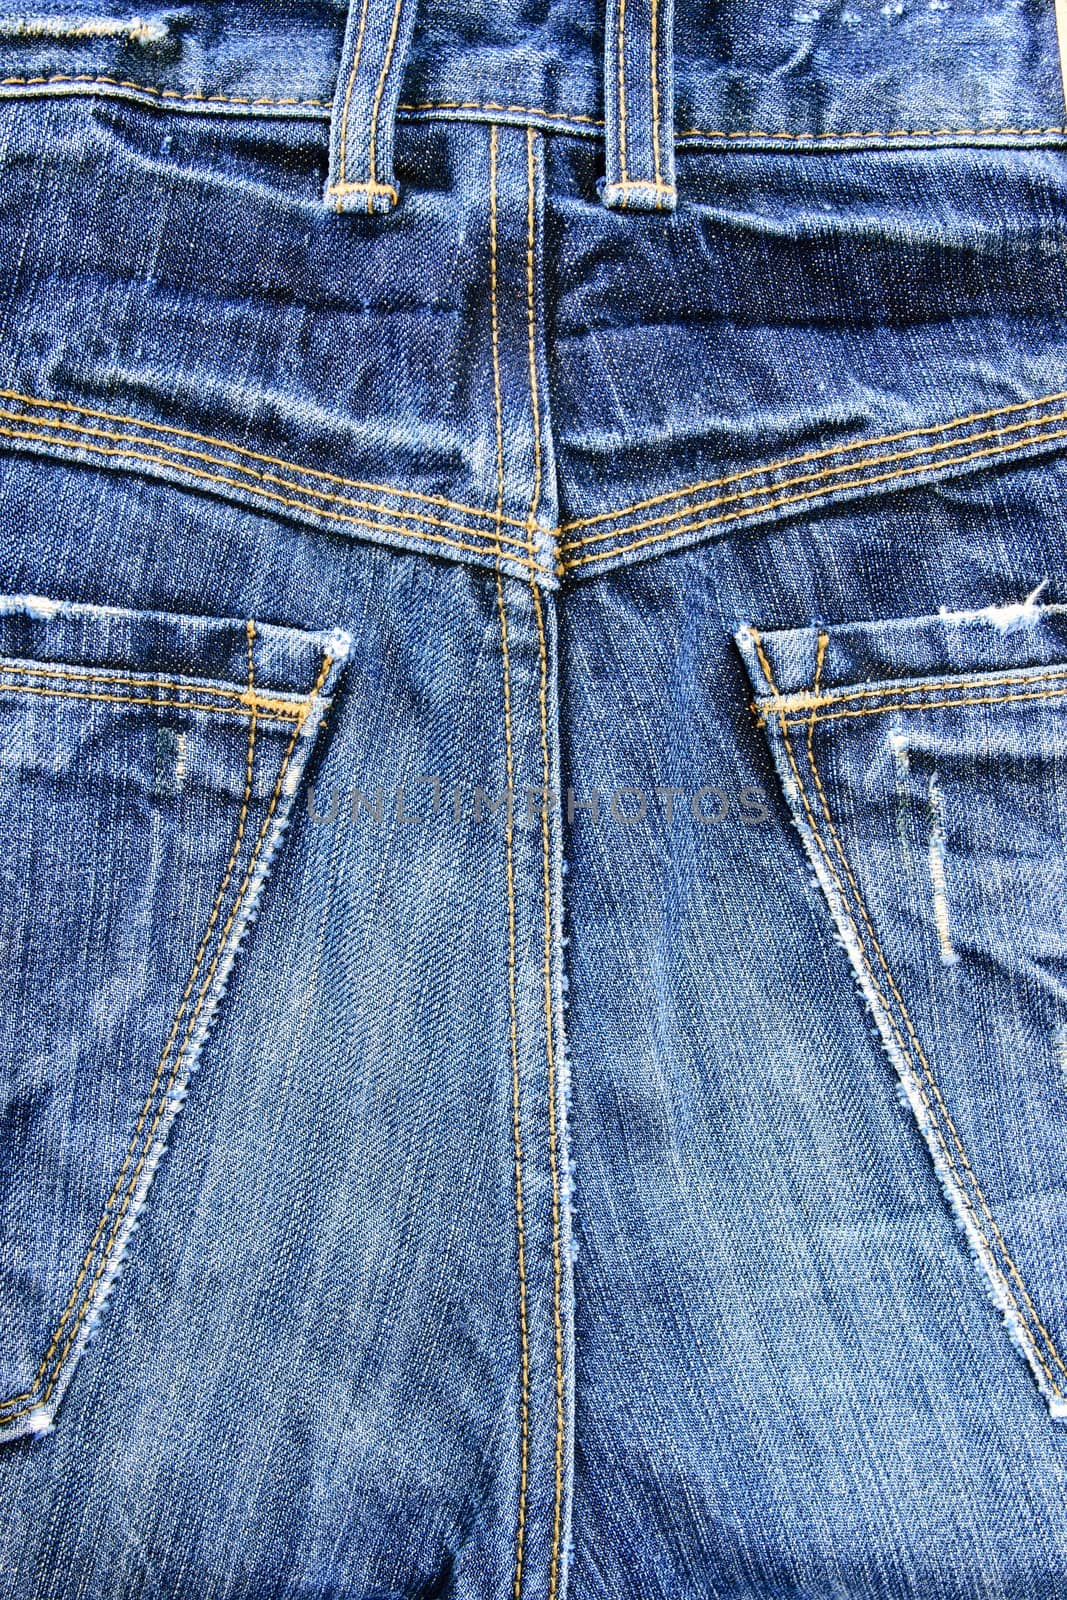 Blue jeans, long legs For men and women.